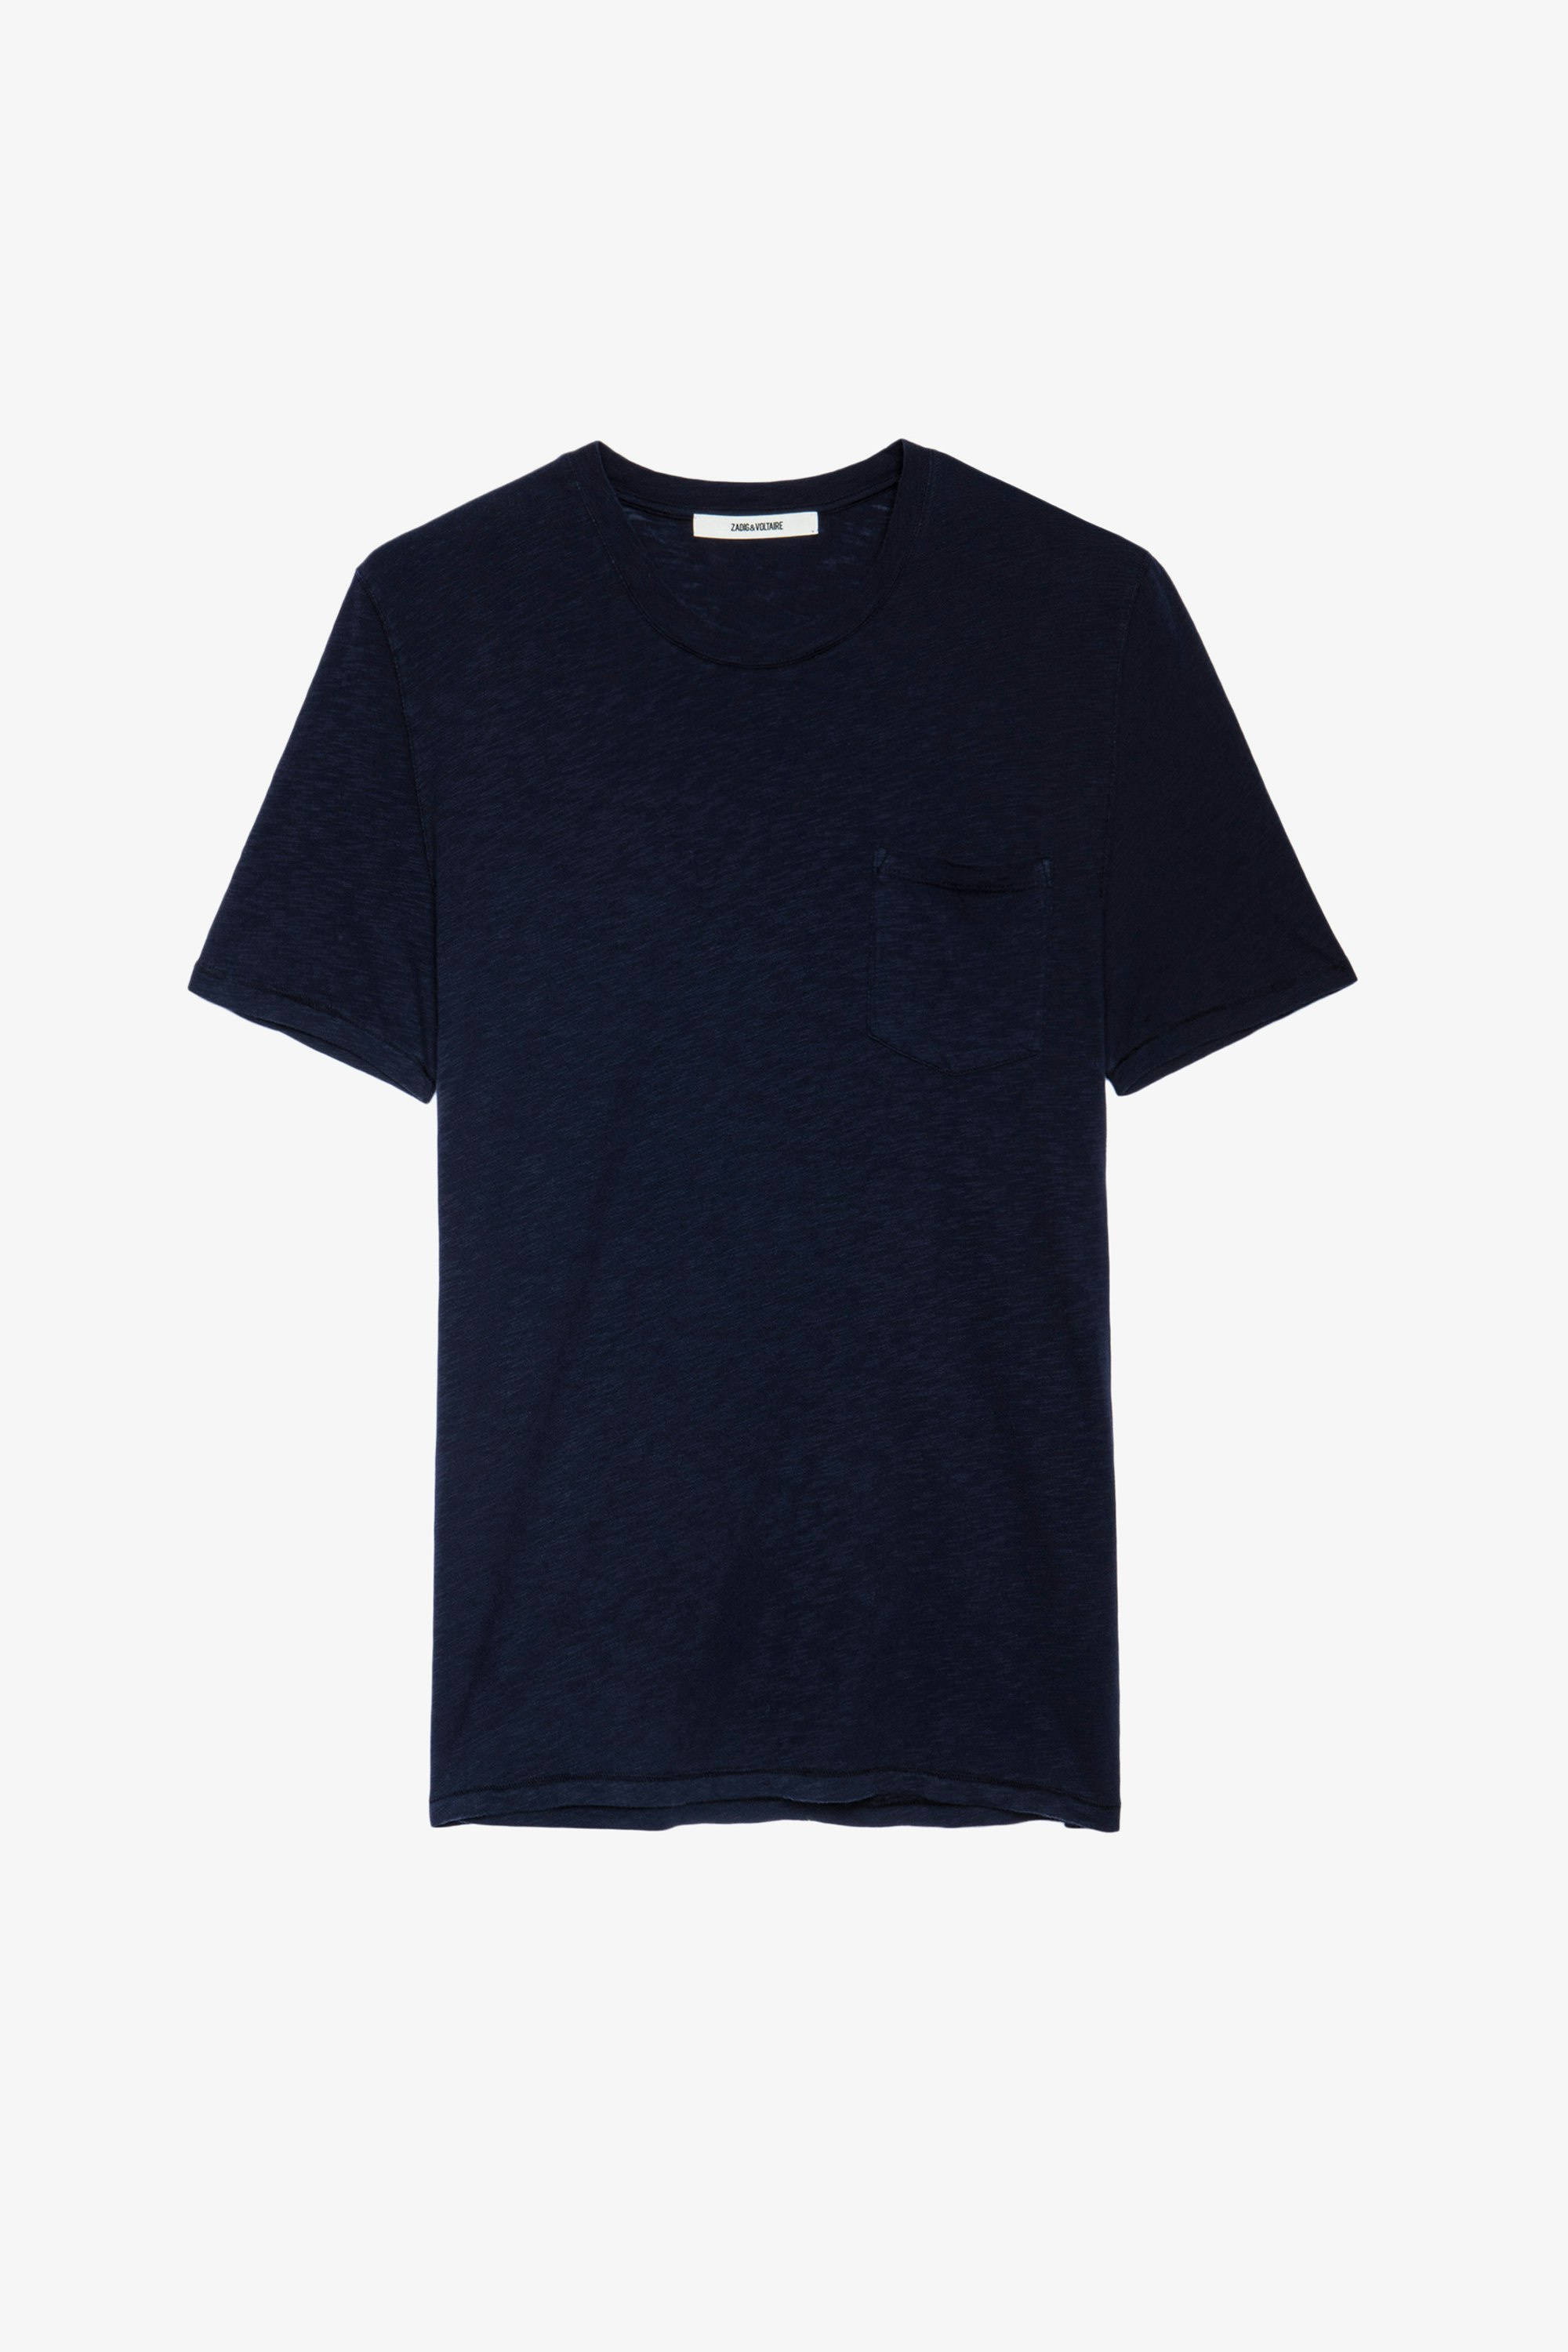 Stockholm T-shirt - Men's blue T-shirt.